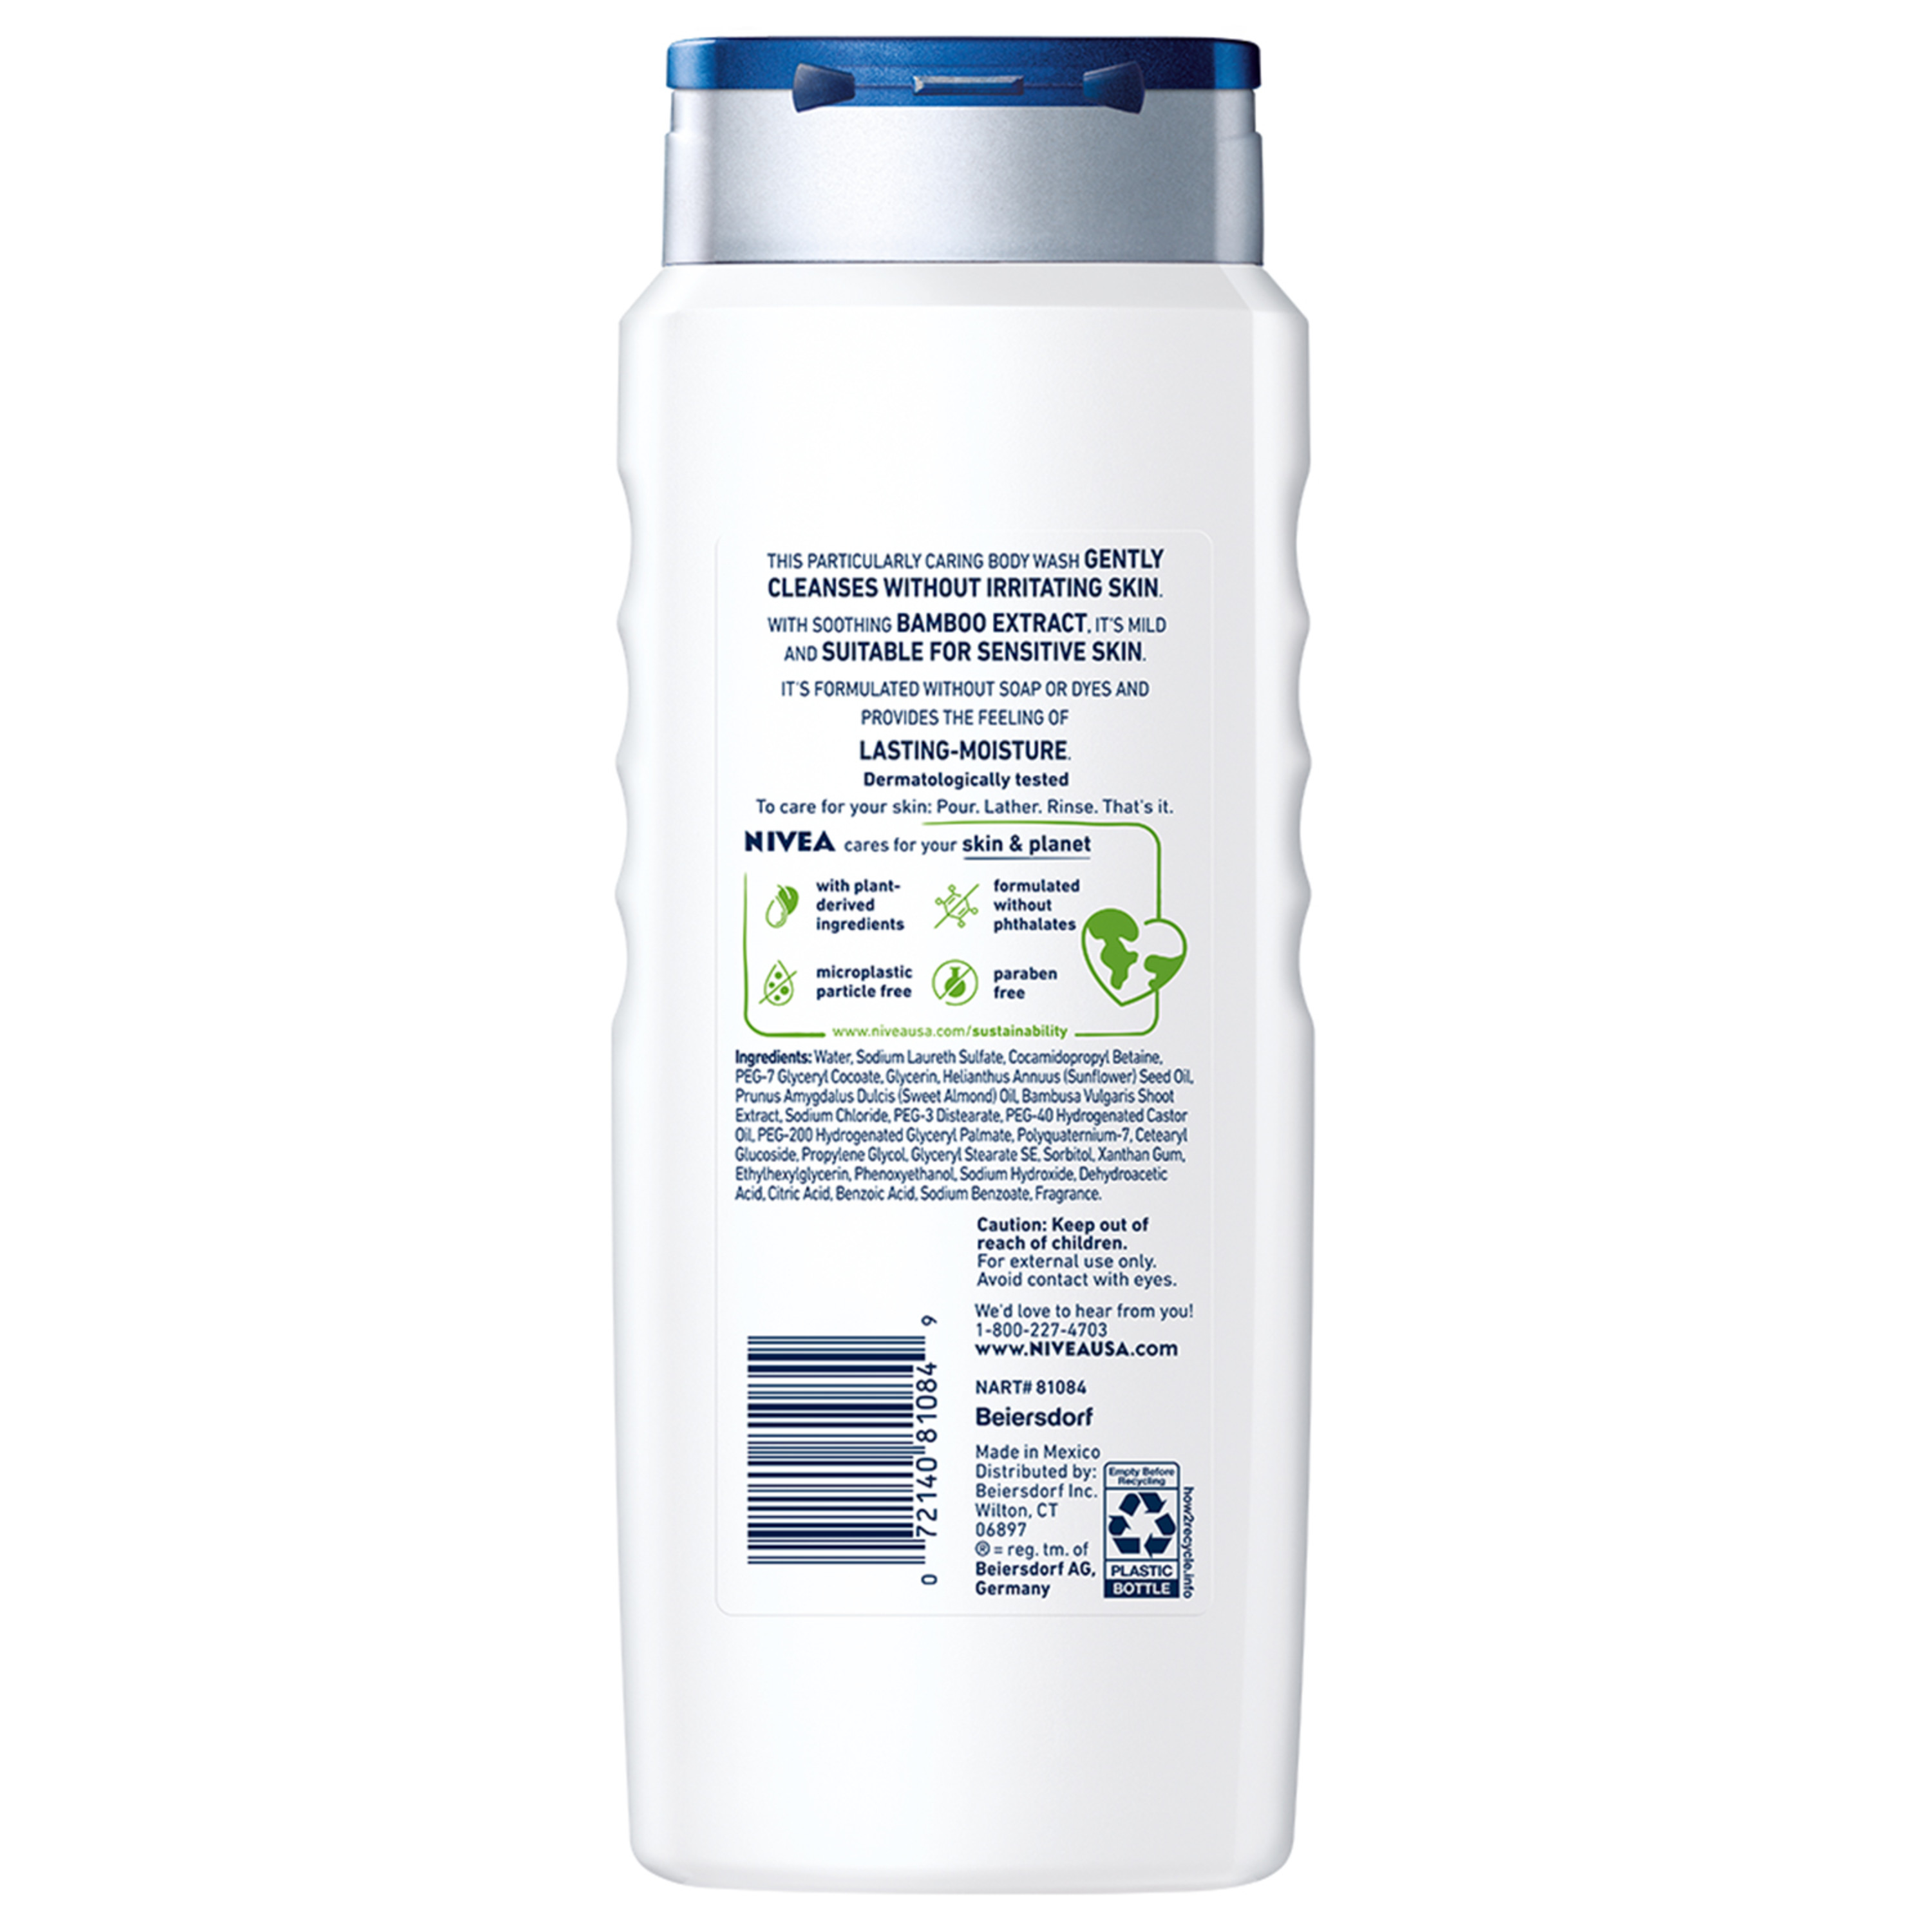 NIVEA MEN Sensitive Body Wash with Bamboo Extract, 16.9 Fl Oz Bottle - image 13 of 13